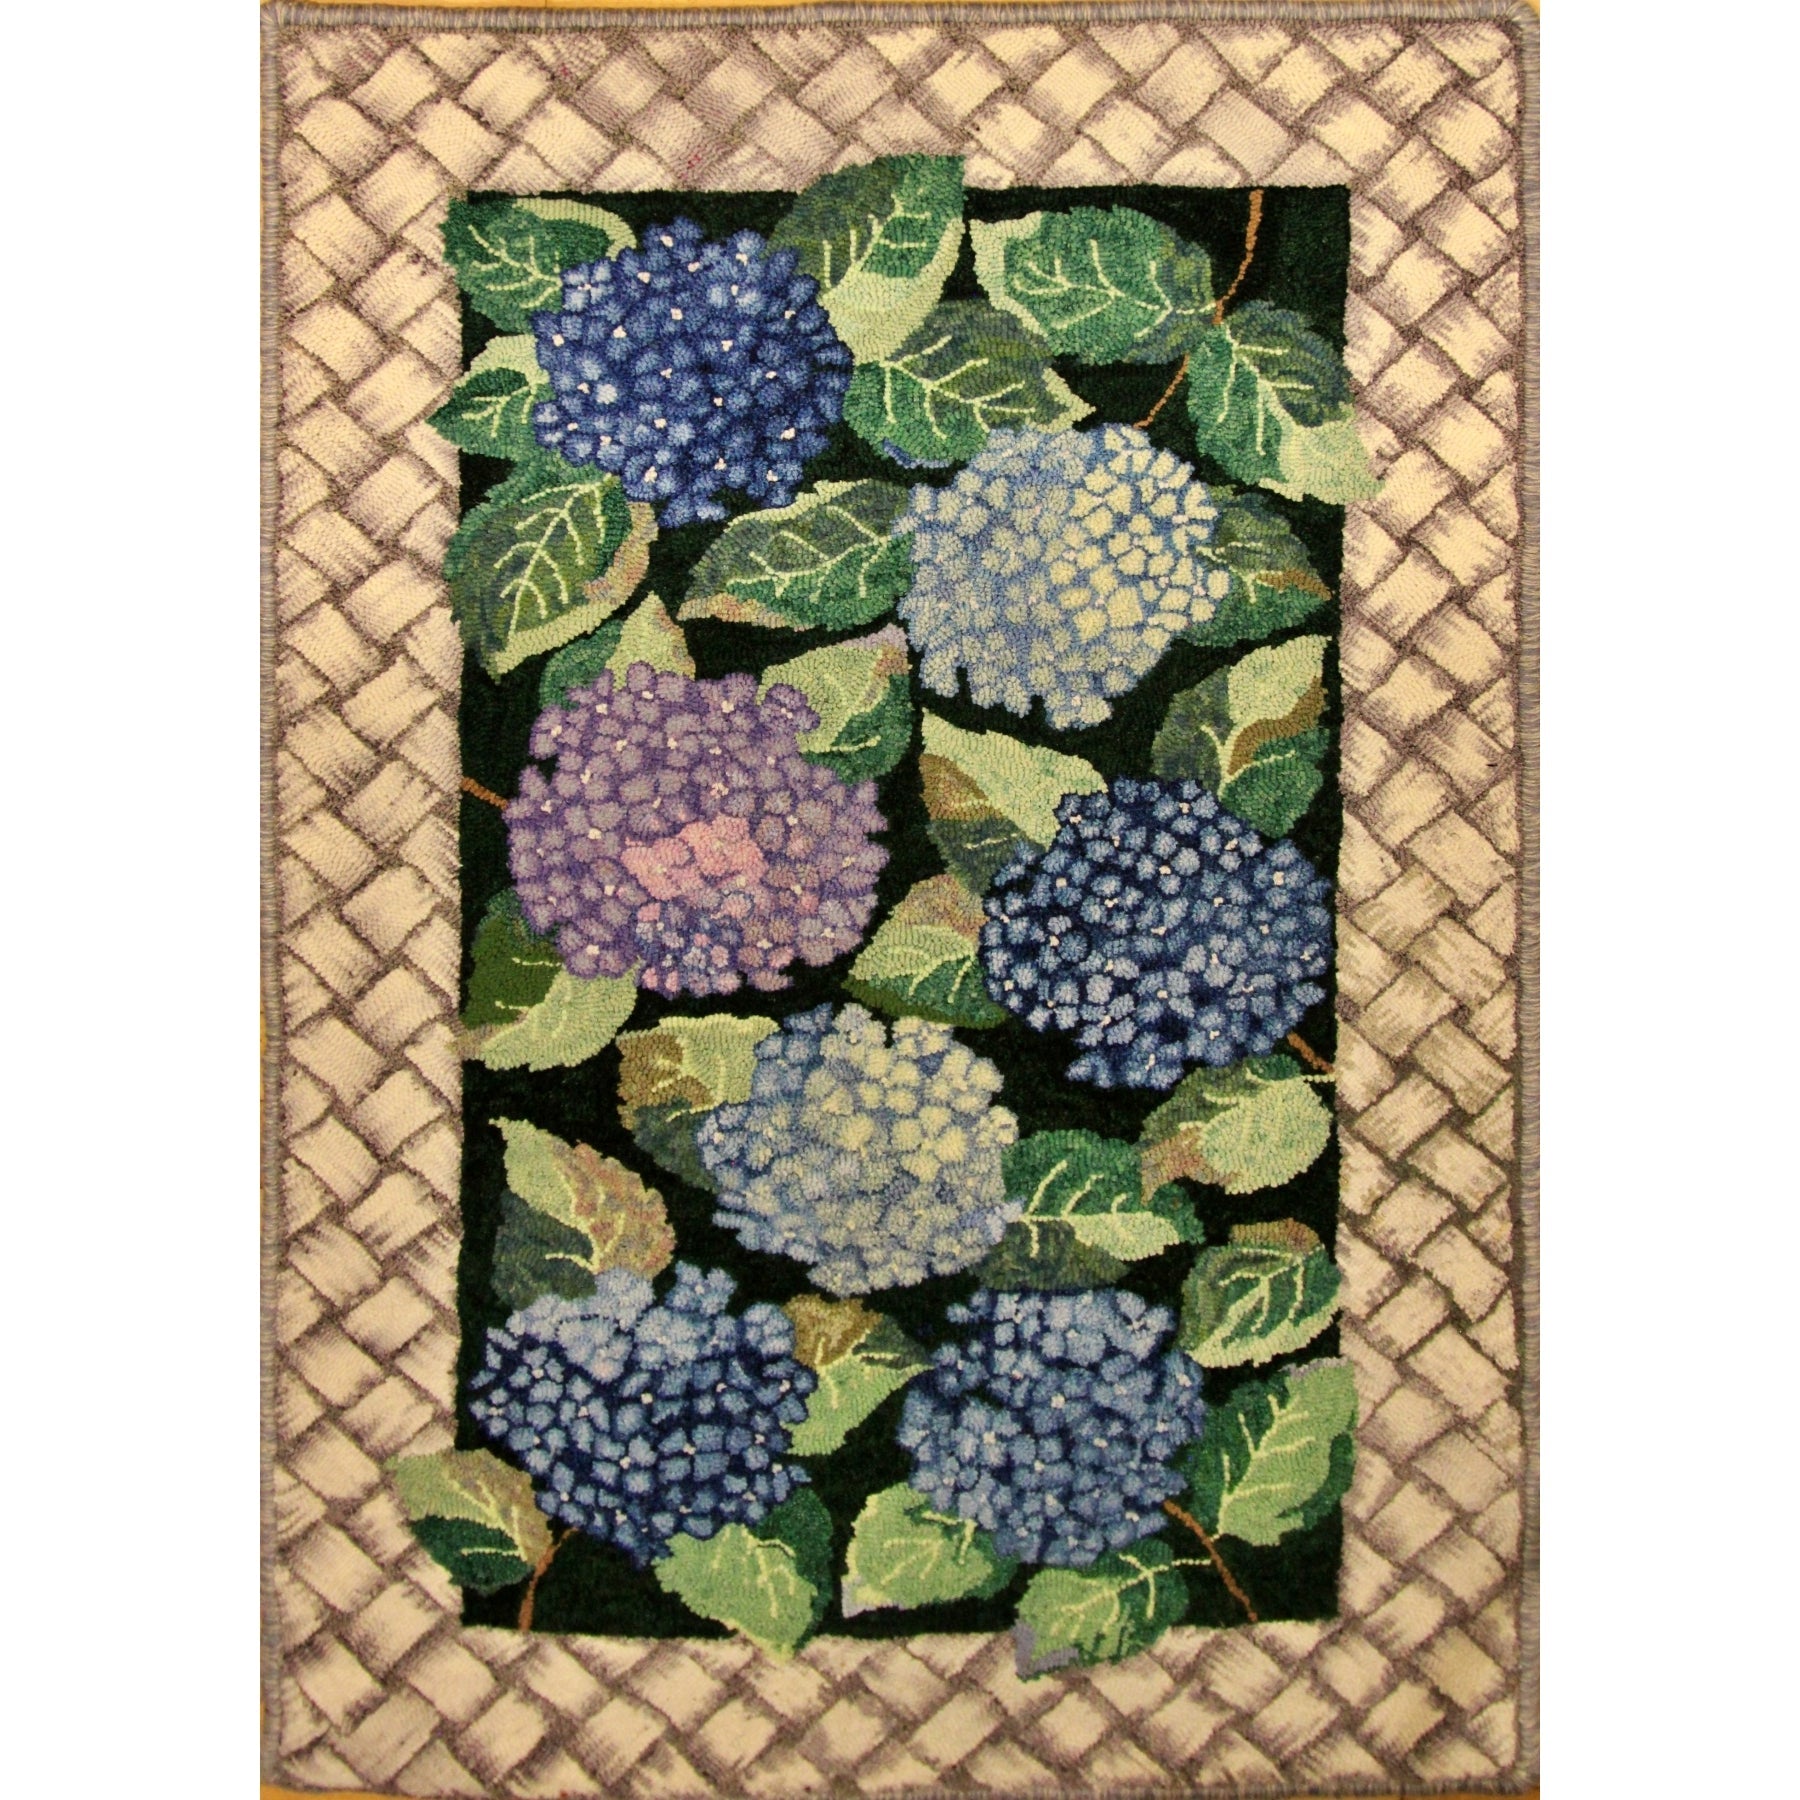 Hydrangeas, rug hooked by Janet Williams